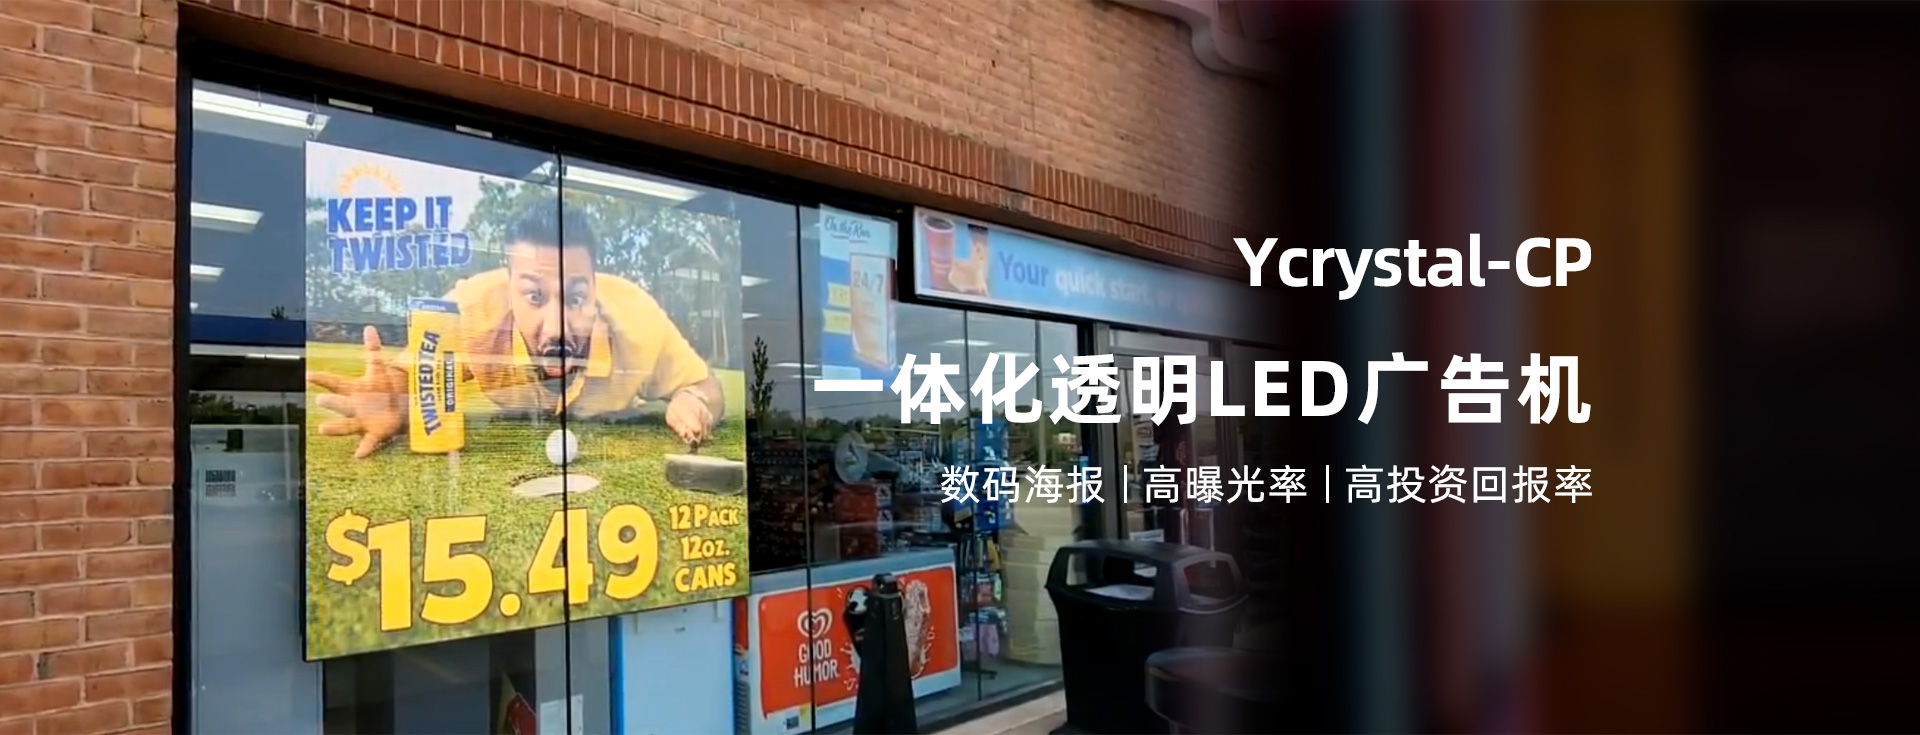 一体化透明led广告机ycrystal-cp